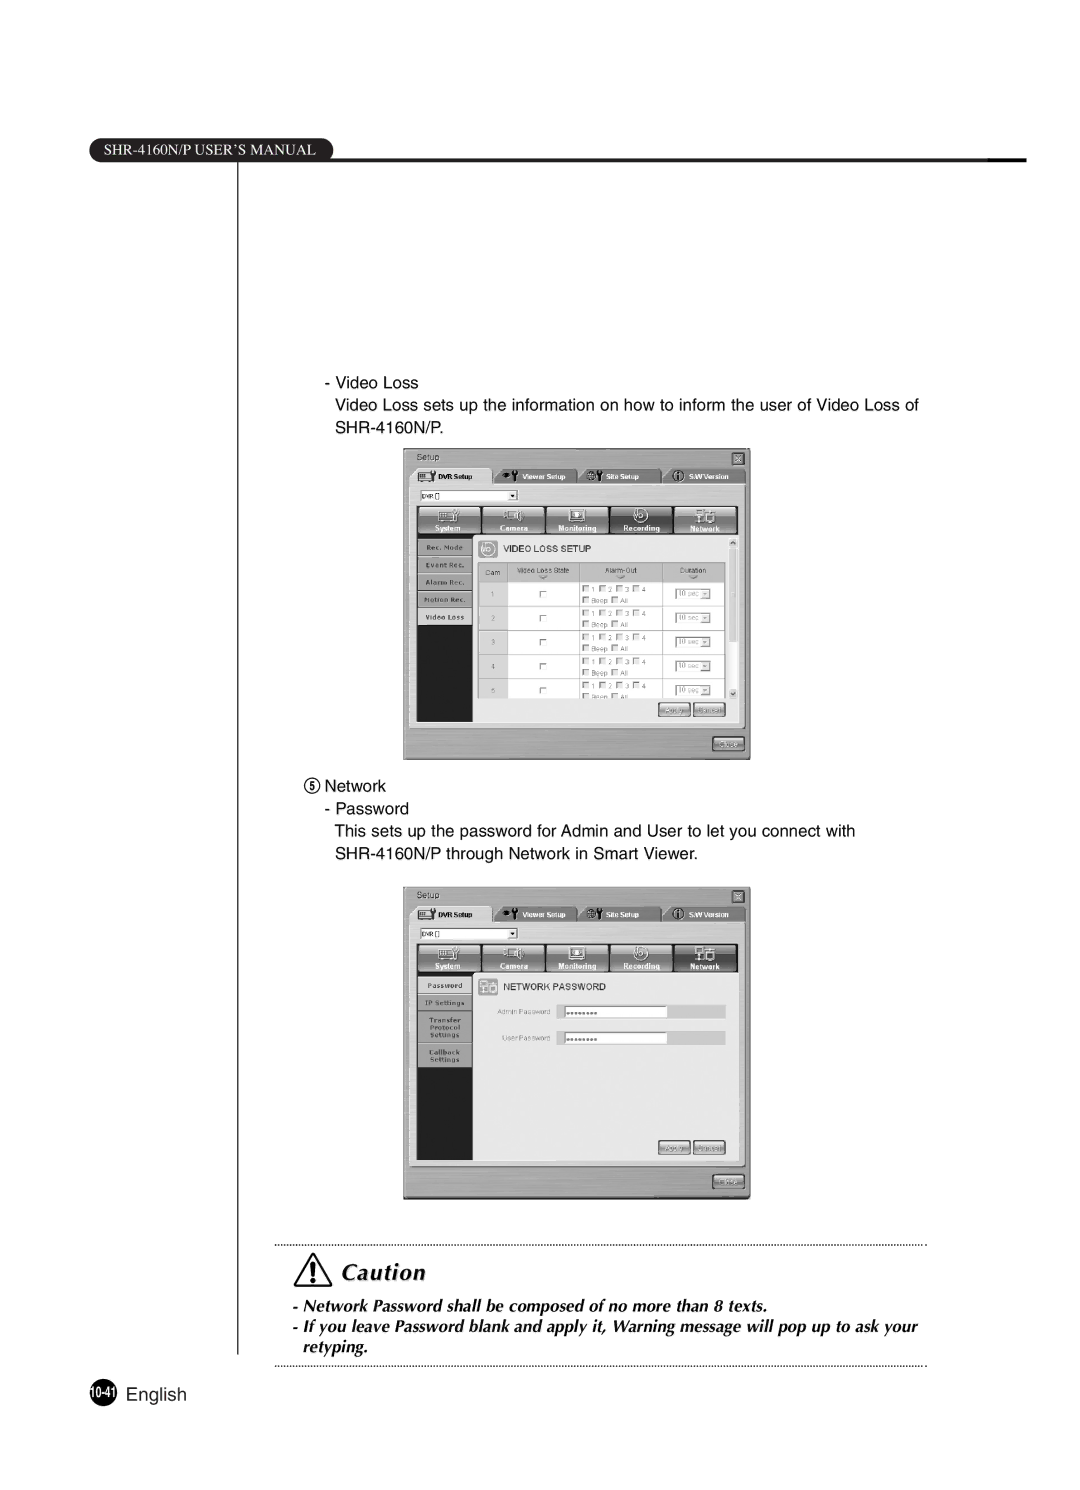 Samsung SHR-4160P manual 10-41English 